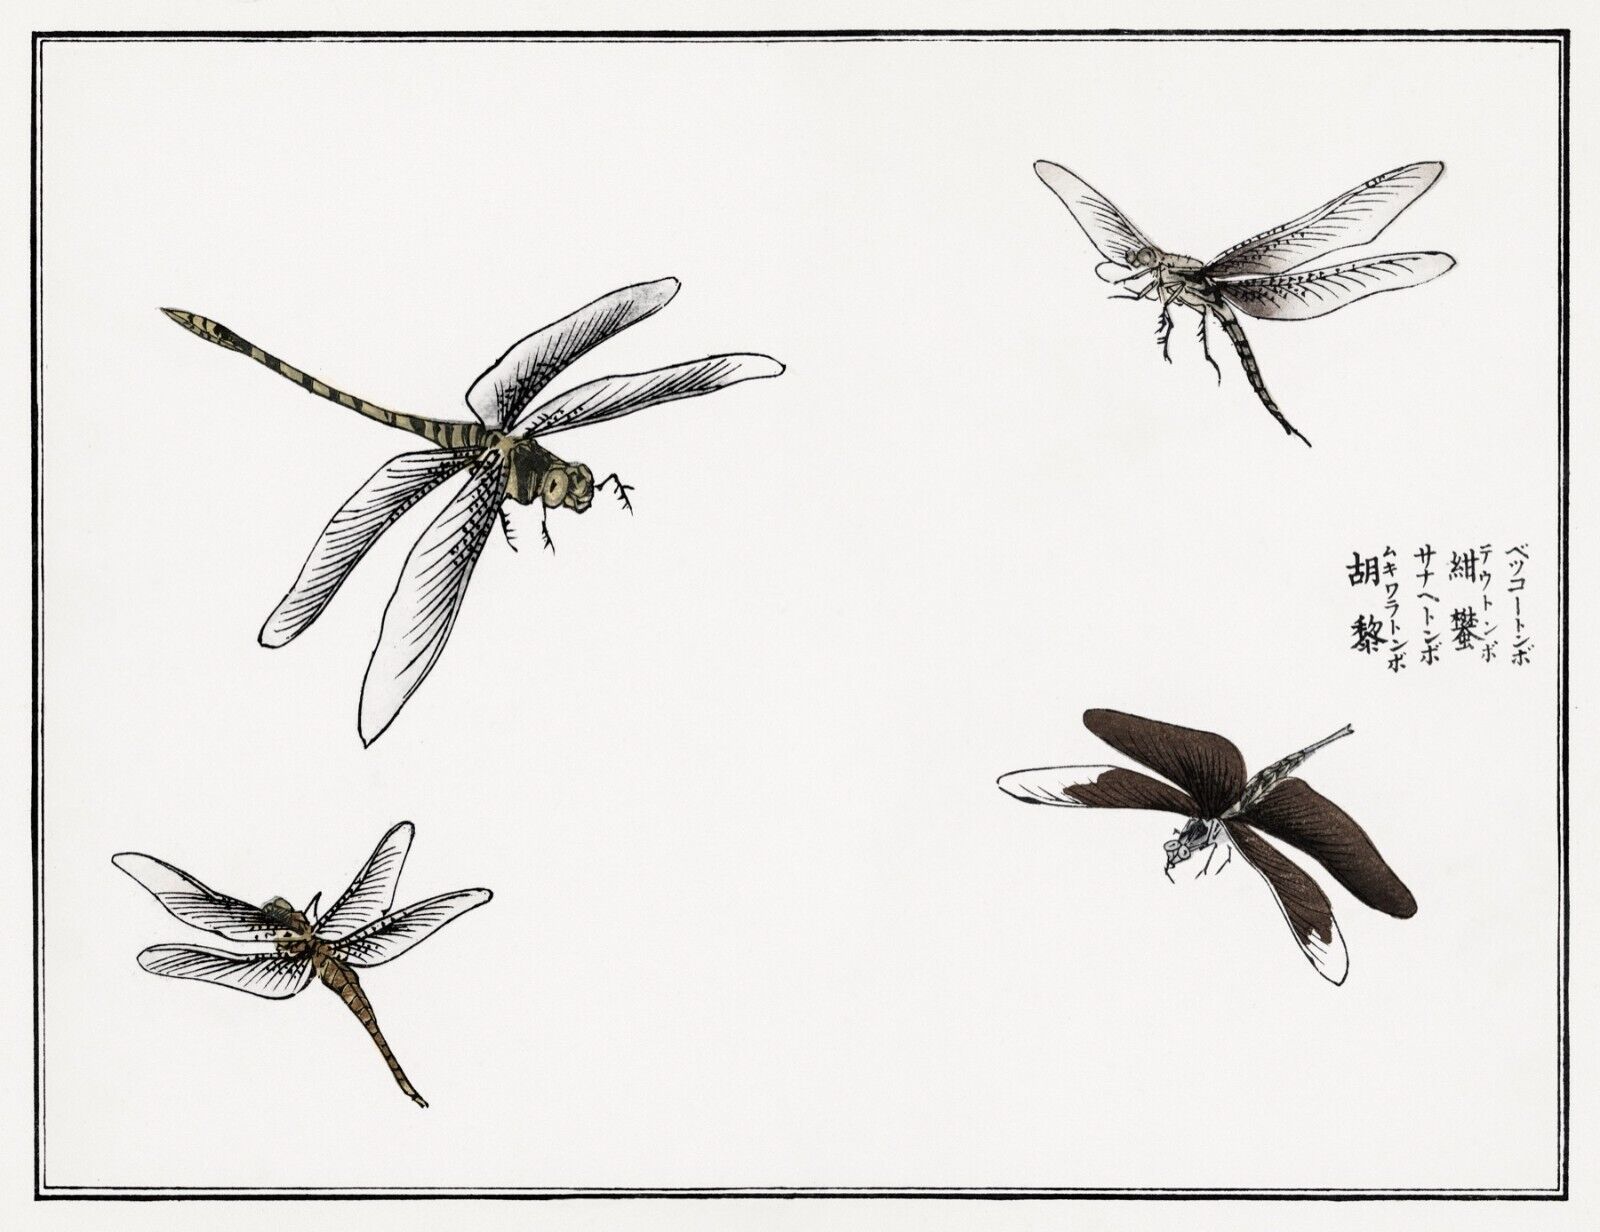 10061.Decor Poster.Room home wall.1910 Japan print.Morimoto Toko art.Dragonflies